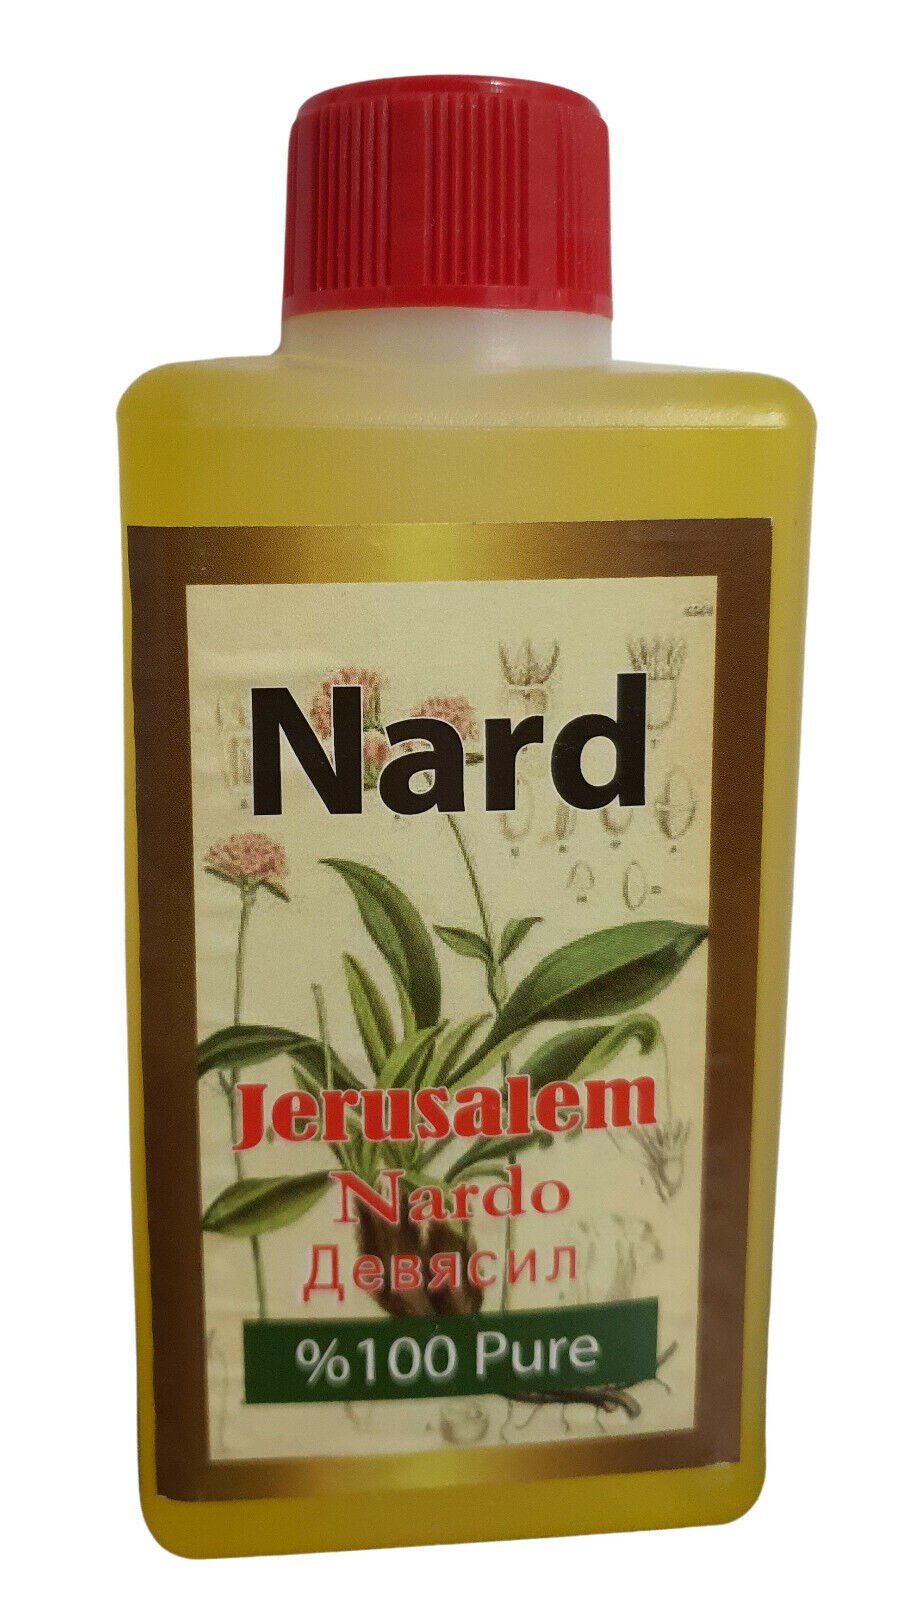 Nard Nardo 100% Pure Anointing Oil 280ml from Jerusalem